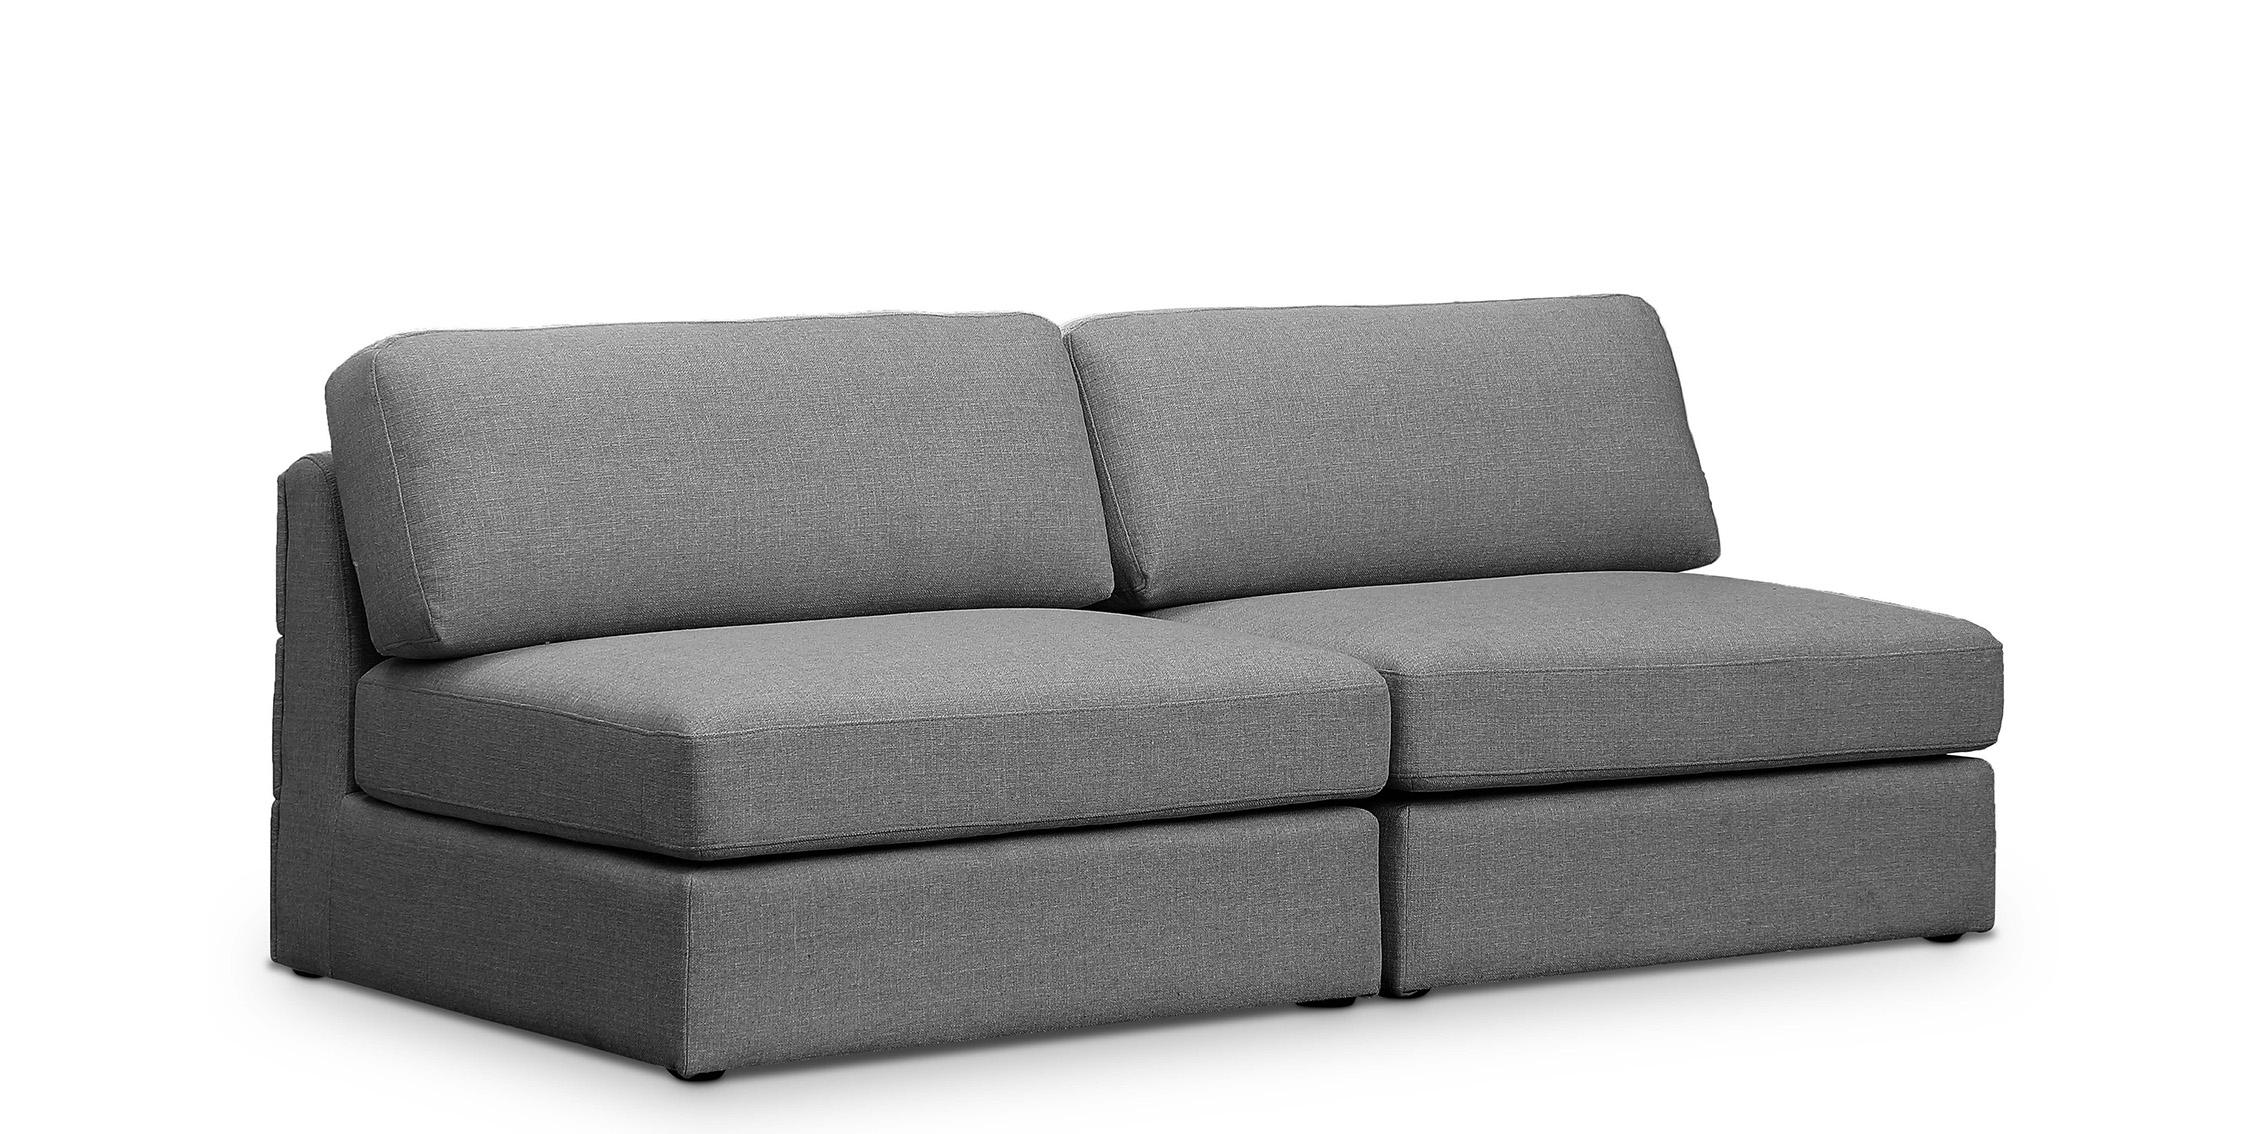 Contemporary, Modern Modular Sofa BECKHAM 681Grey-S76B 681Grey-S76B in Gray Linen